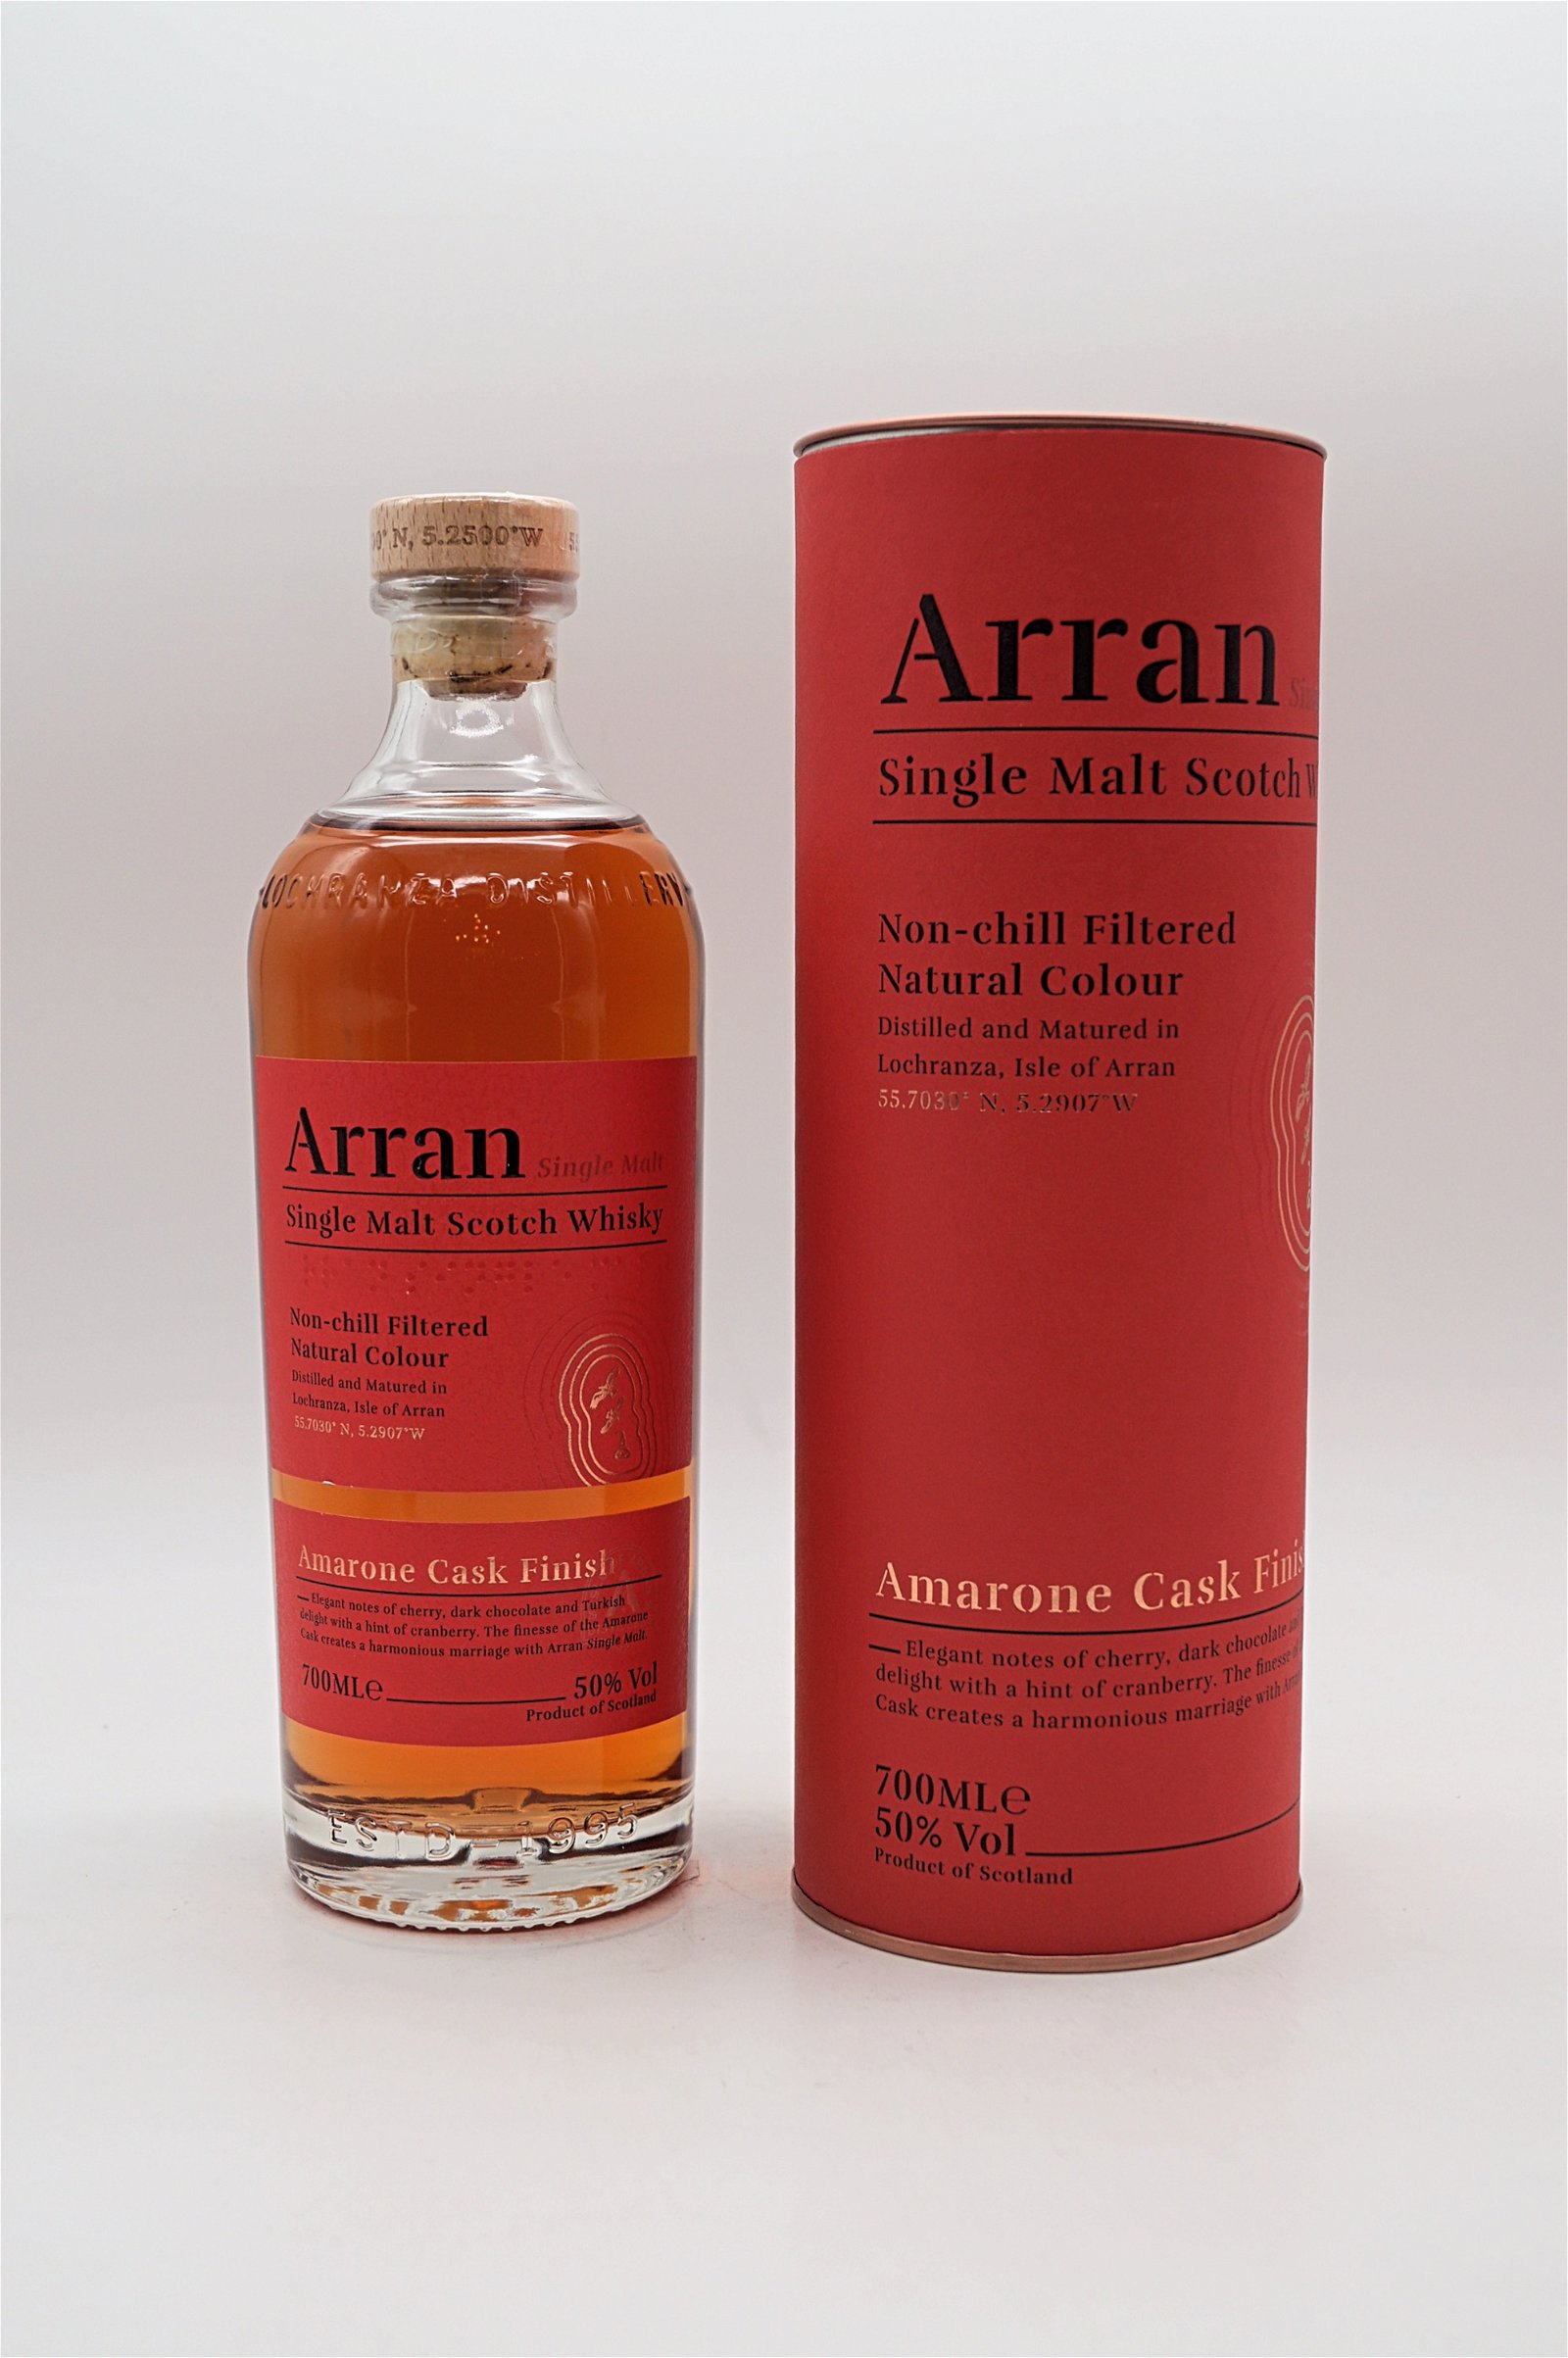 The Arran Amarone Cask Finish Single Malt Scotch Whisky